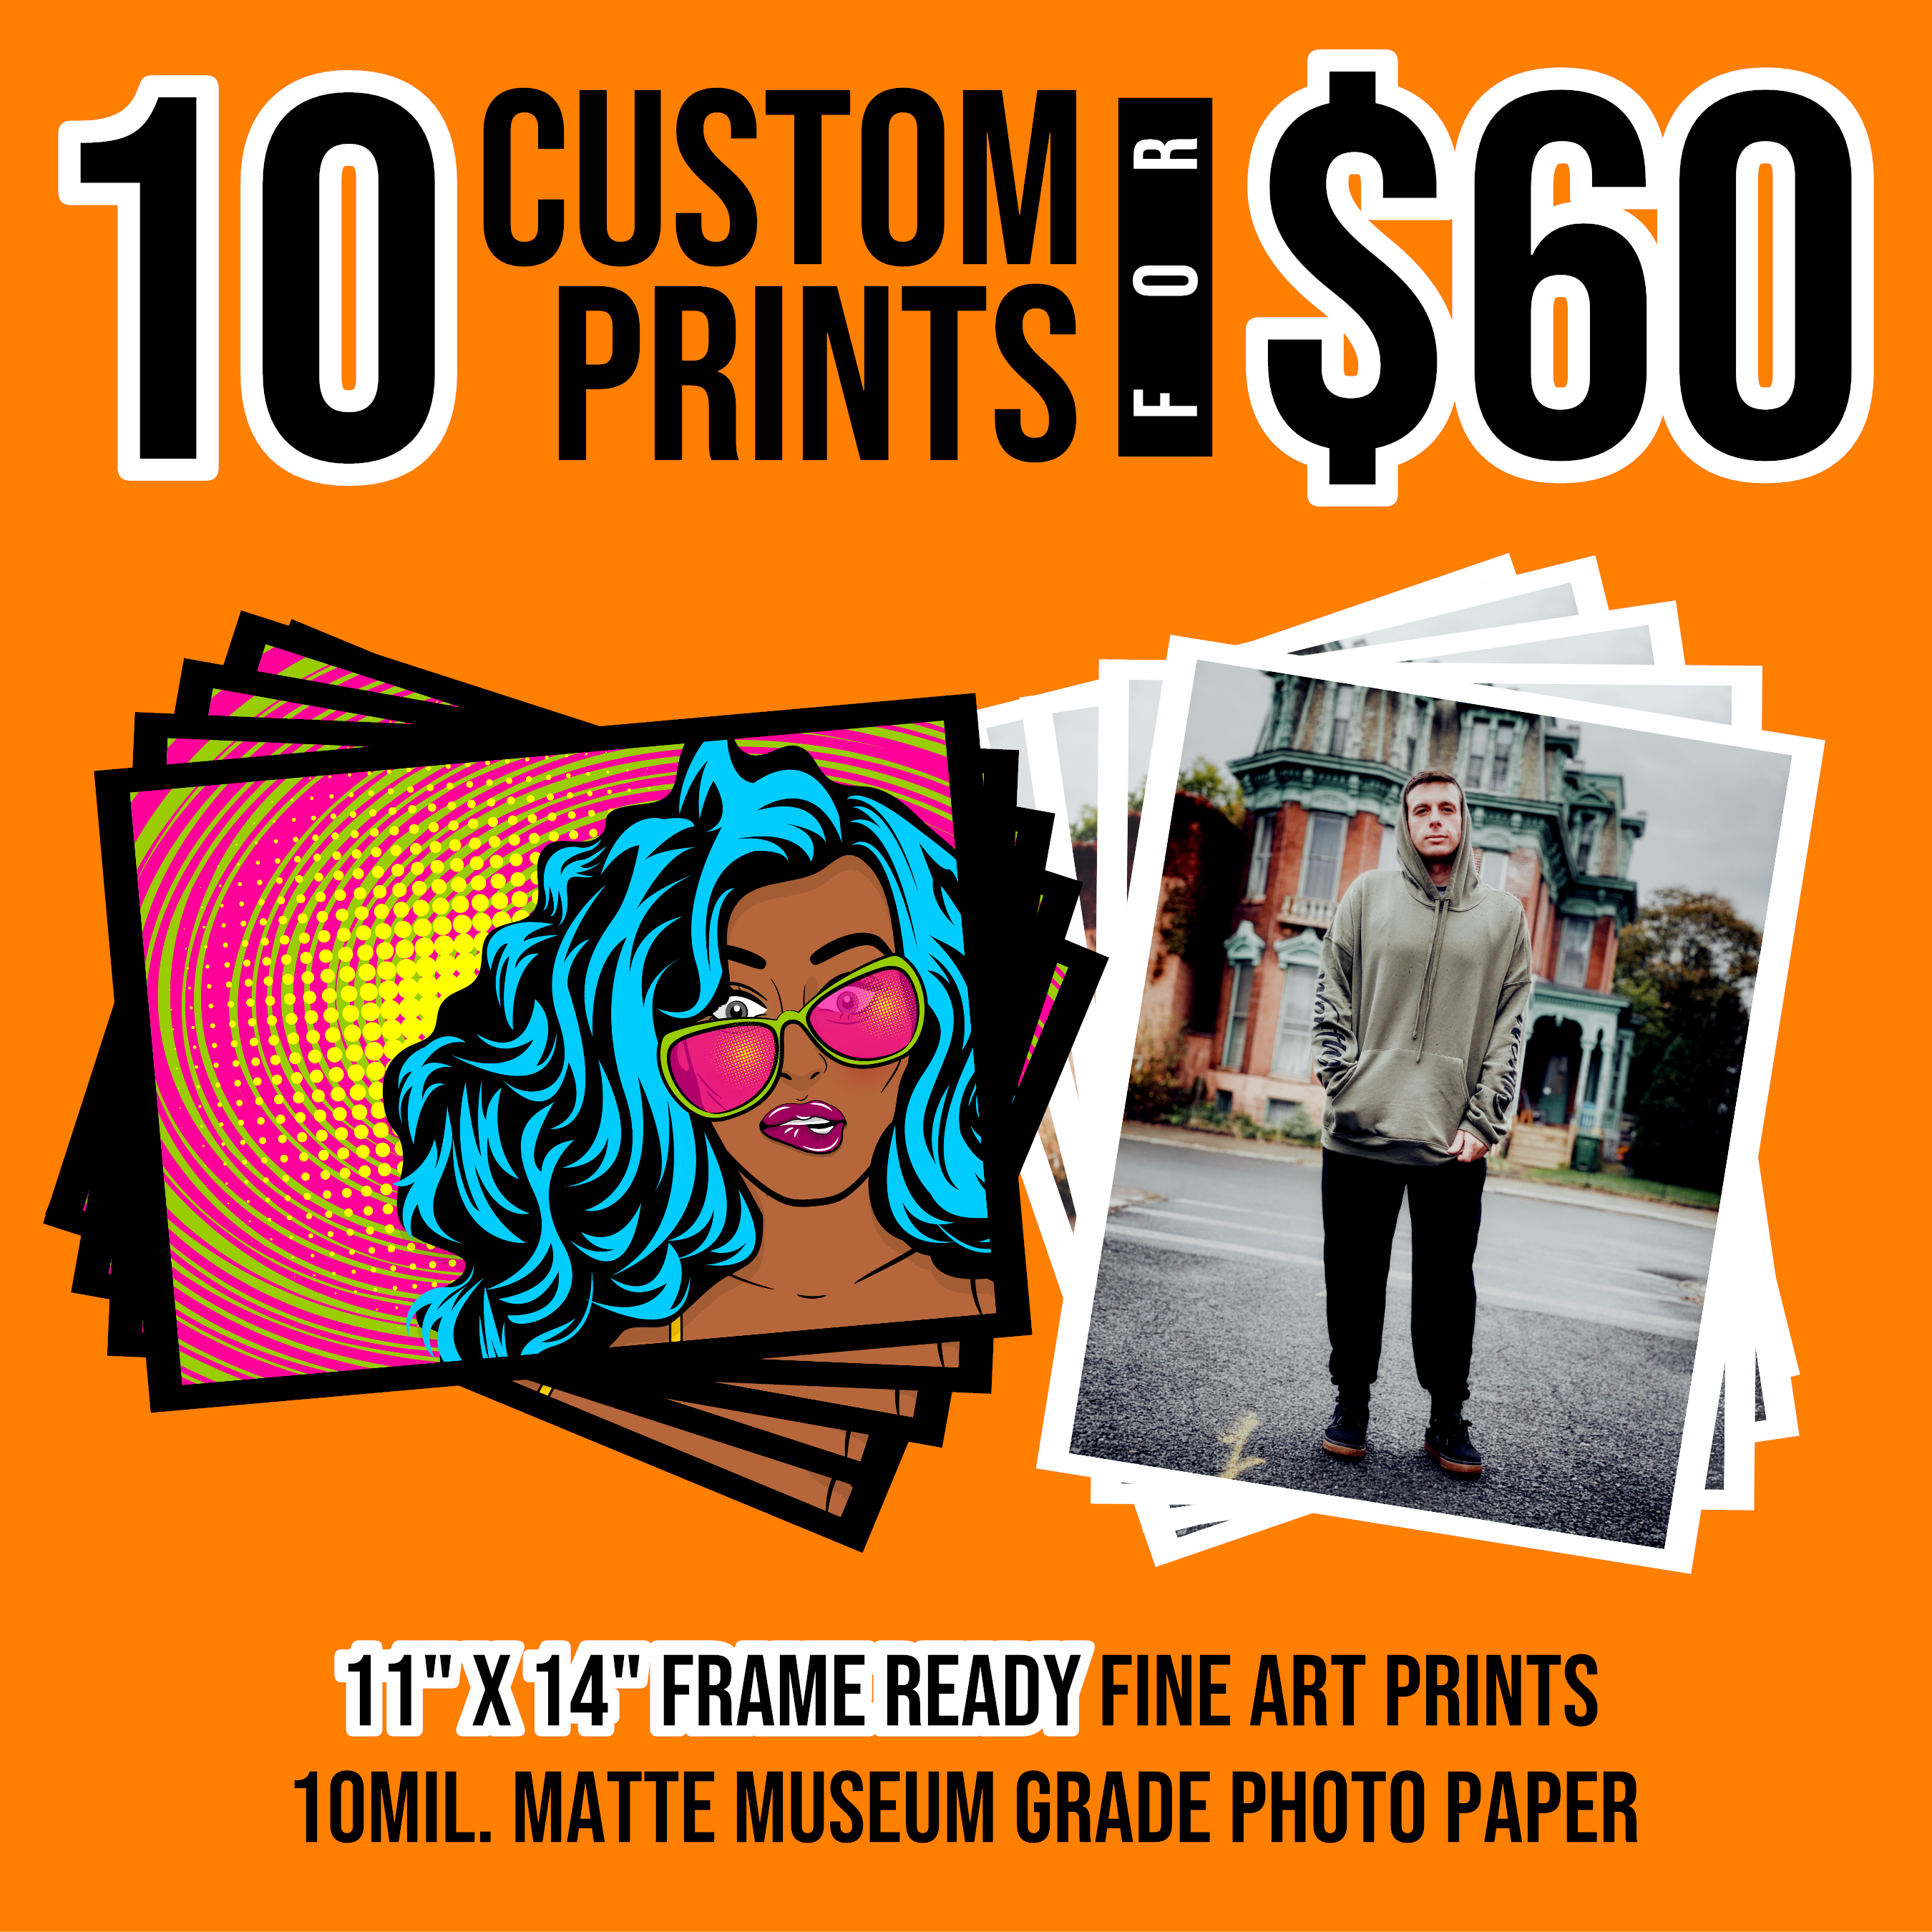 10 Custom Prints for $60 thumbnail